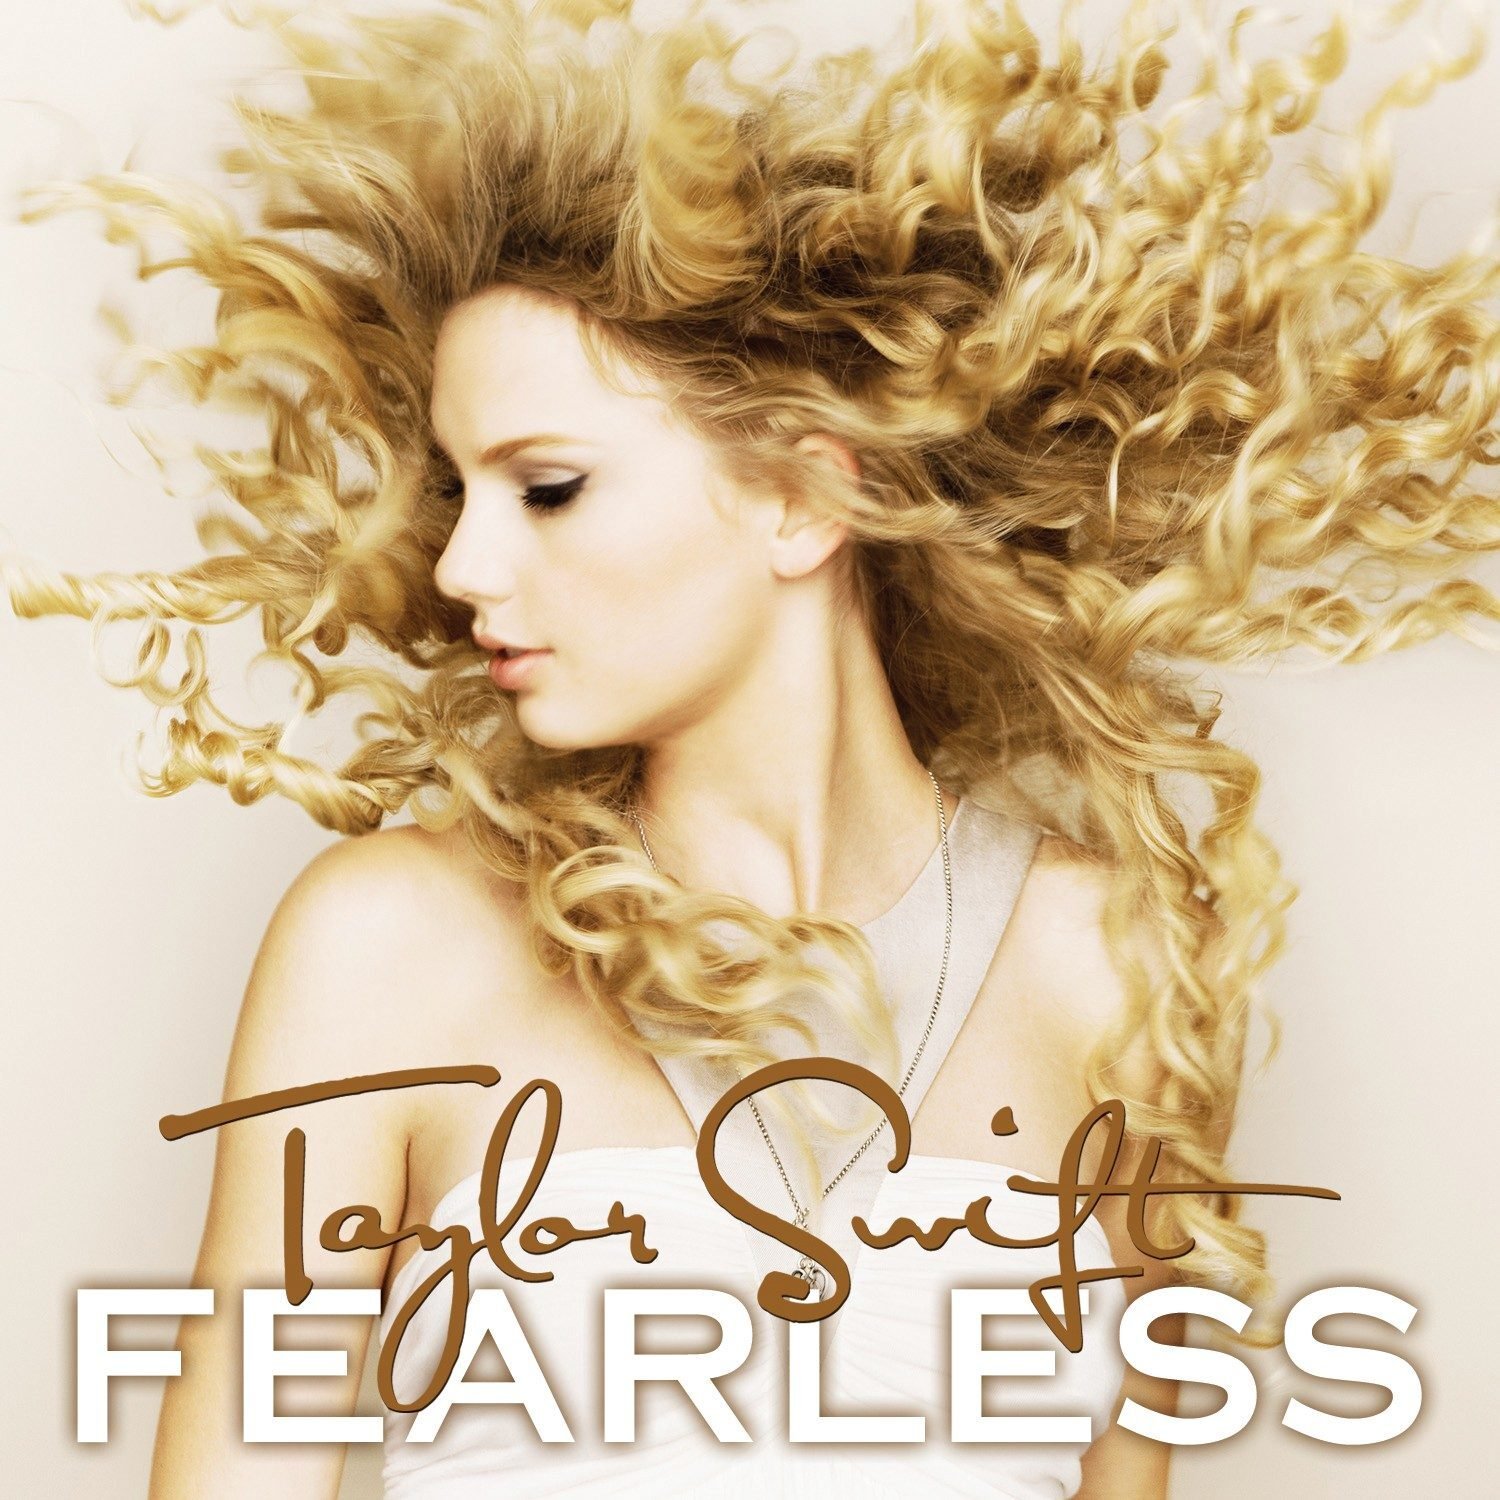 Taylor Swift — Hey Stephen cover artwork